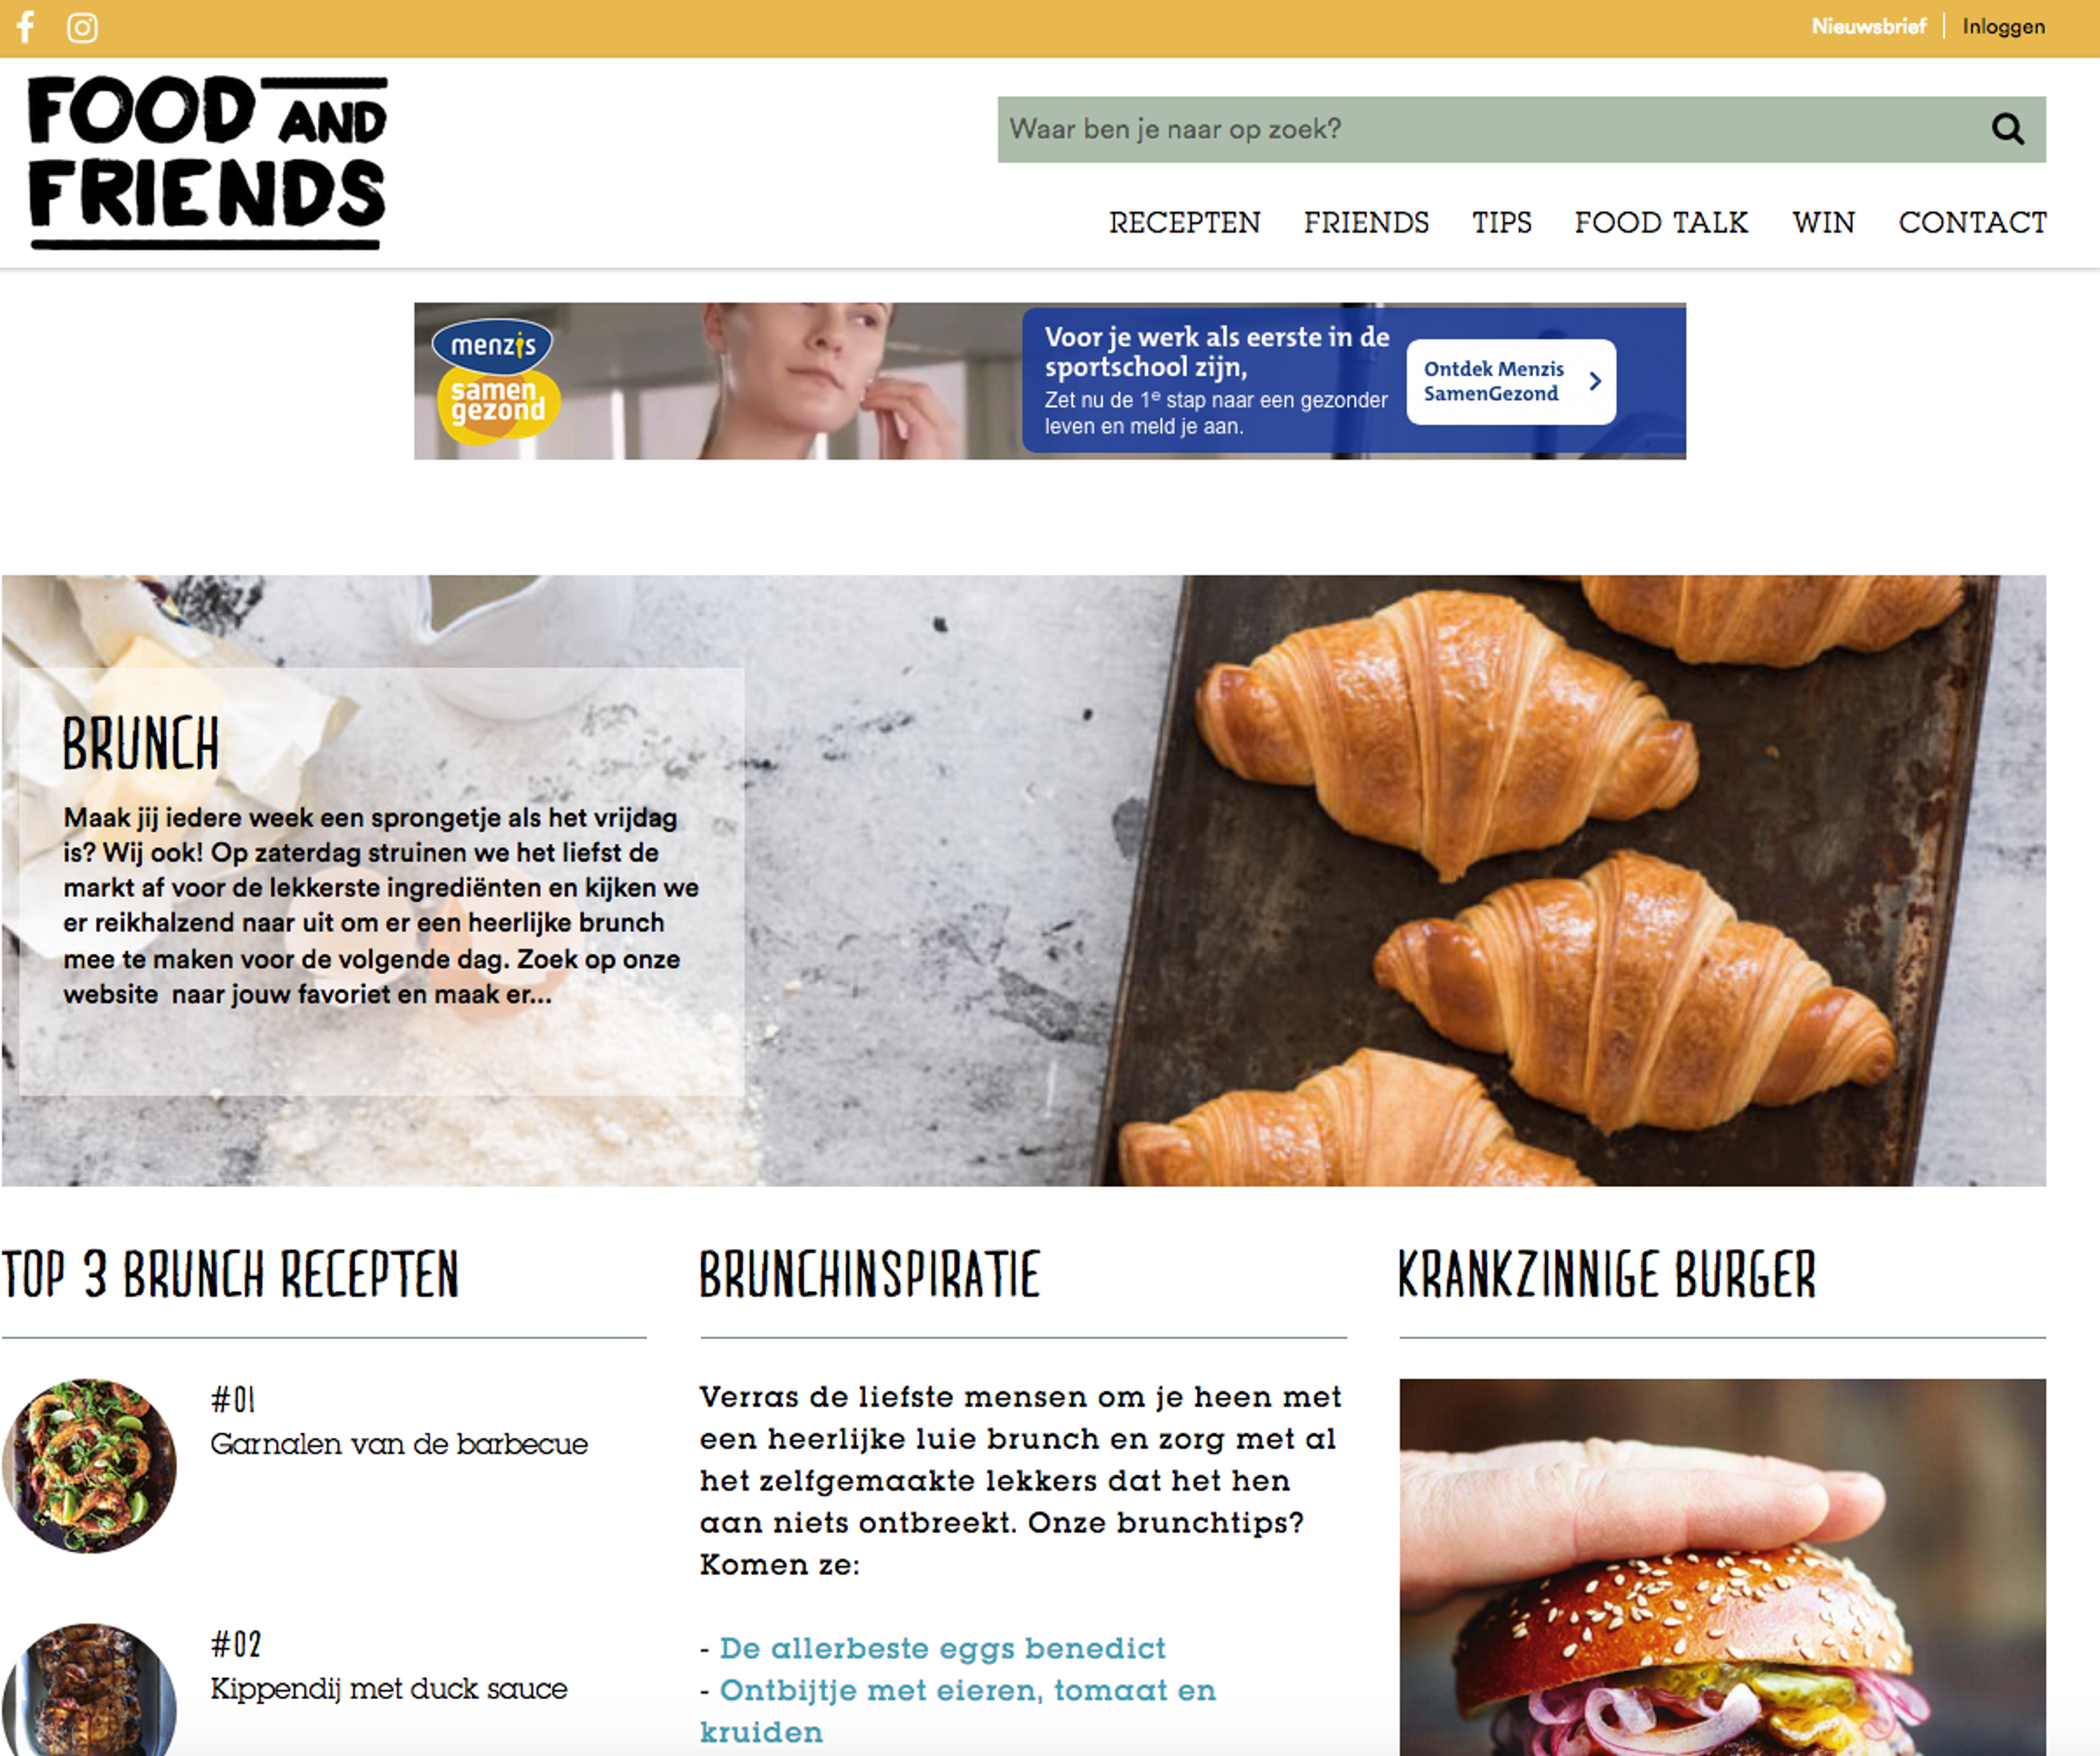 Foodplatform Foodandfriends.nl gelanceerd